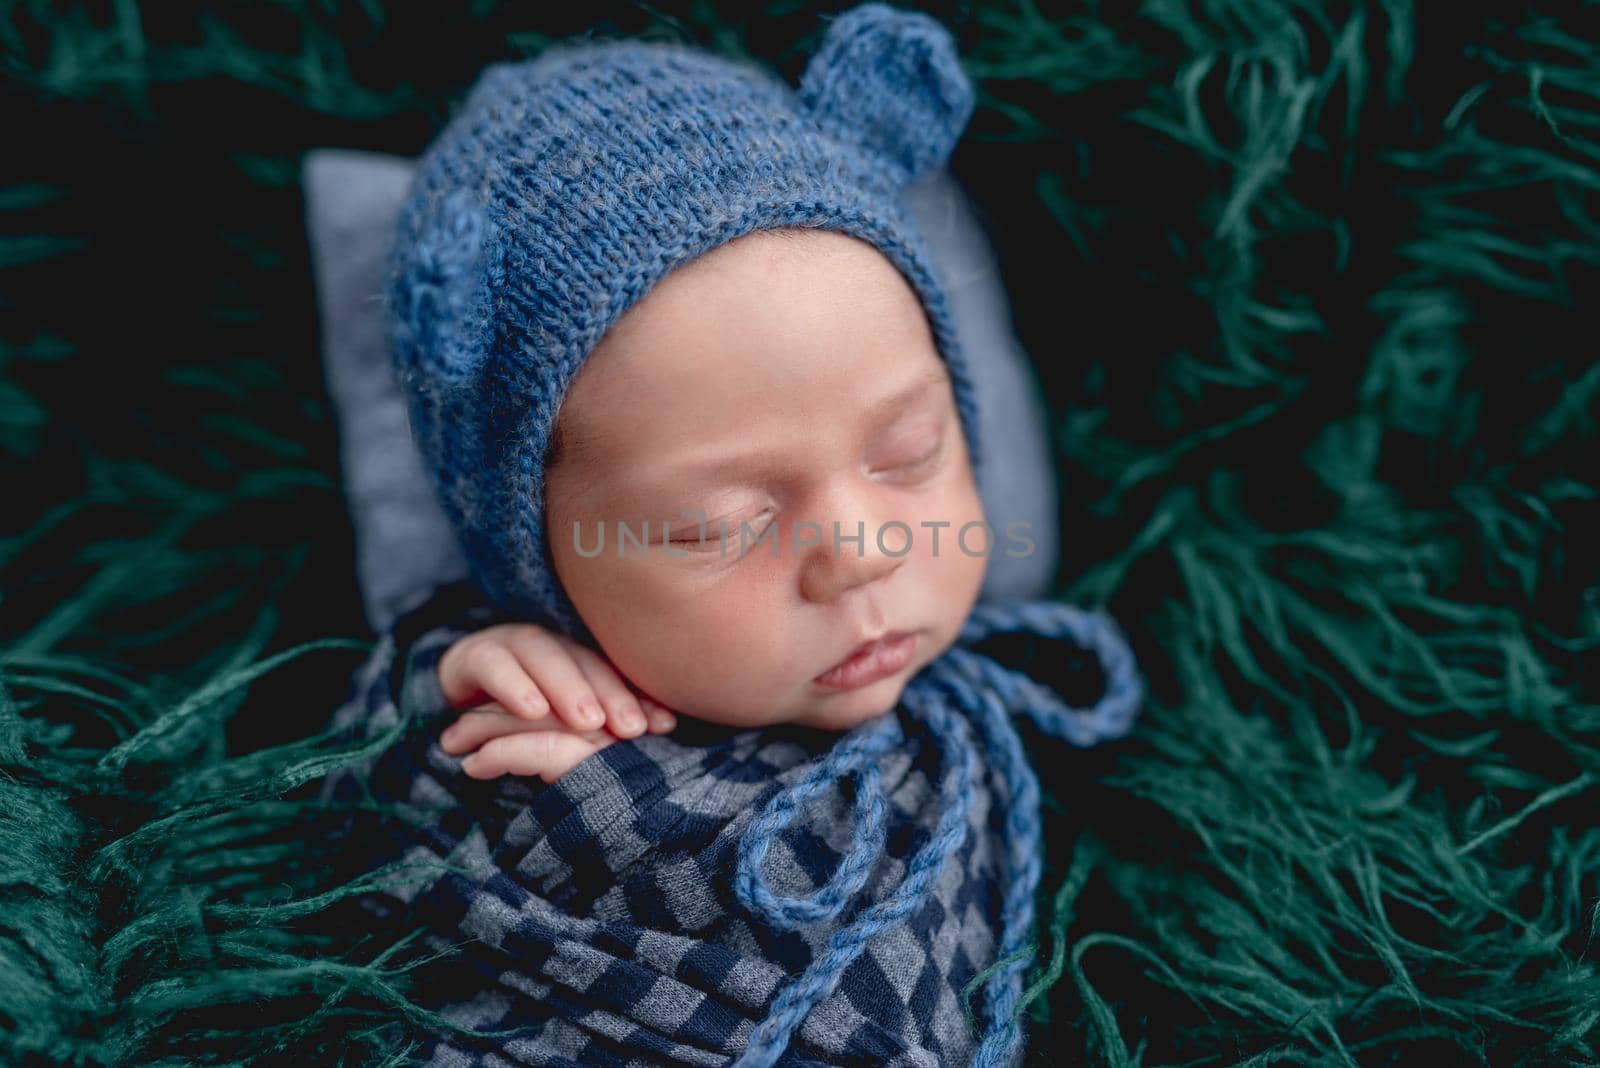 Cute sleeping newborn wearing blue knitted hat in the fur